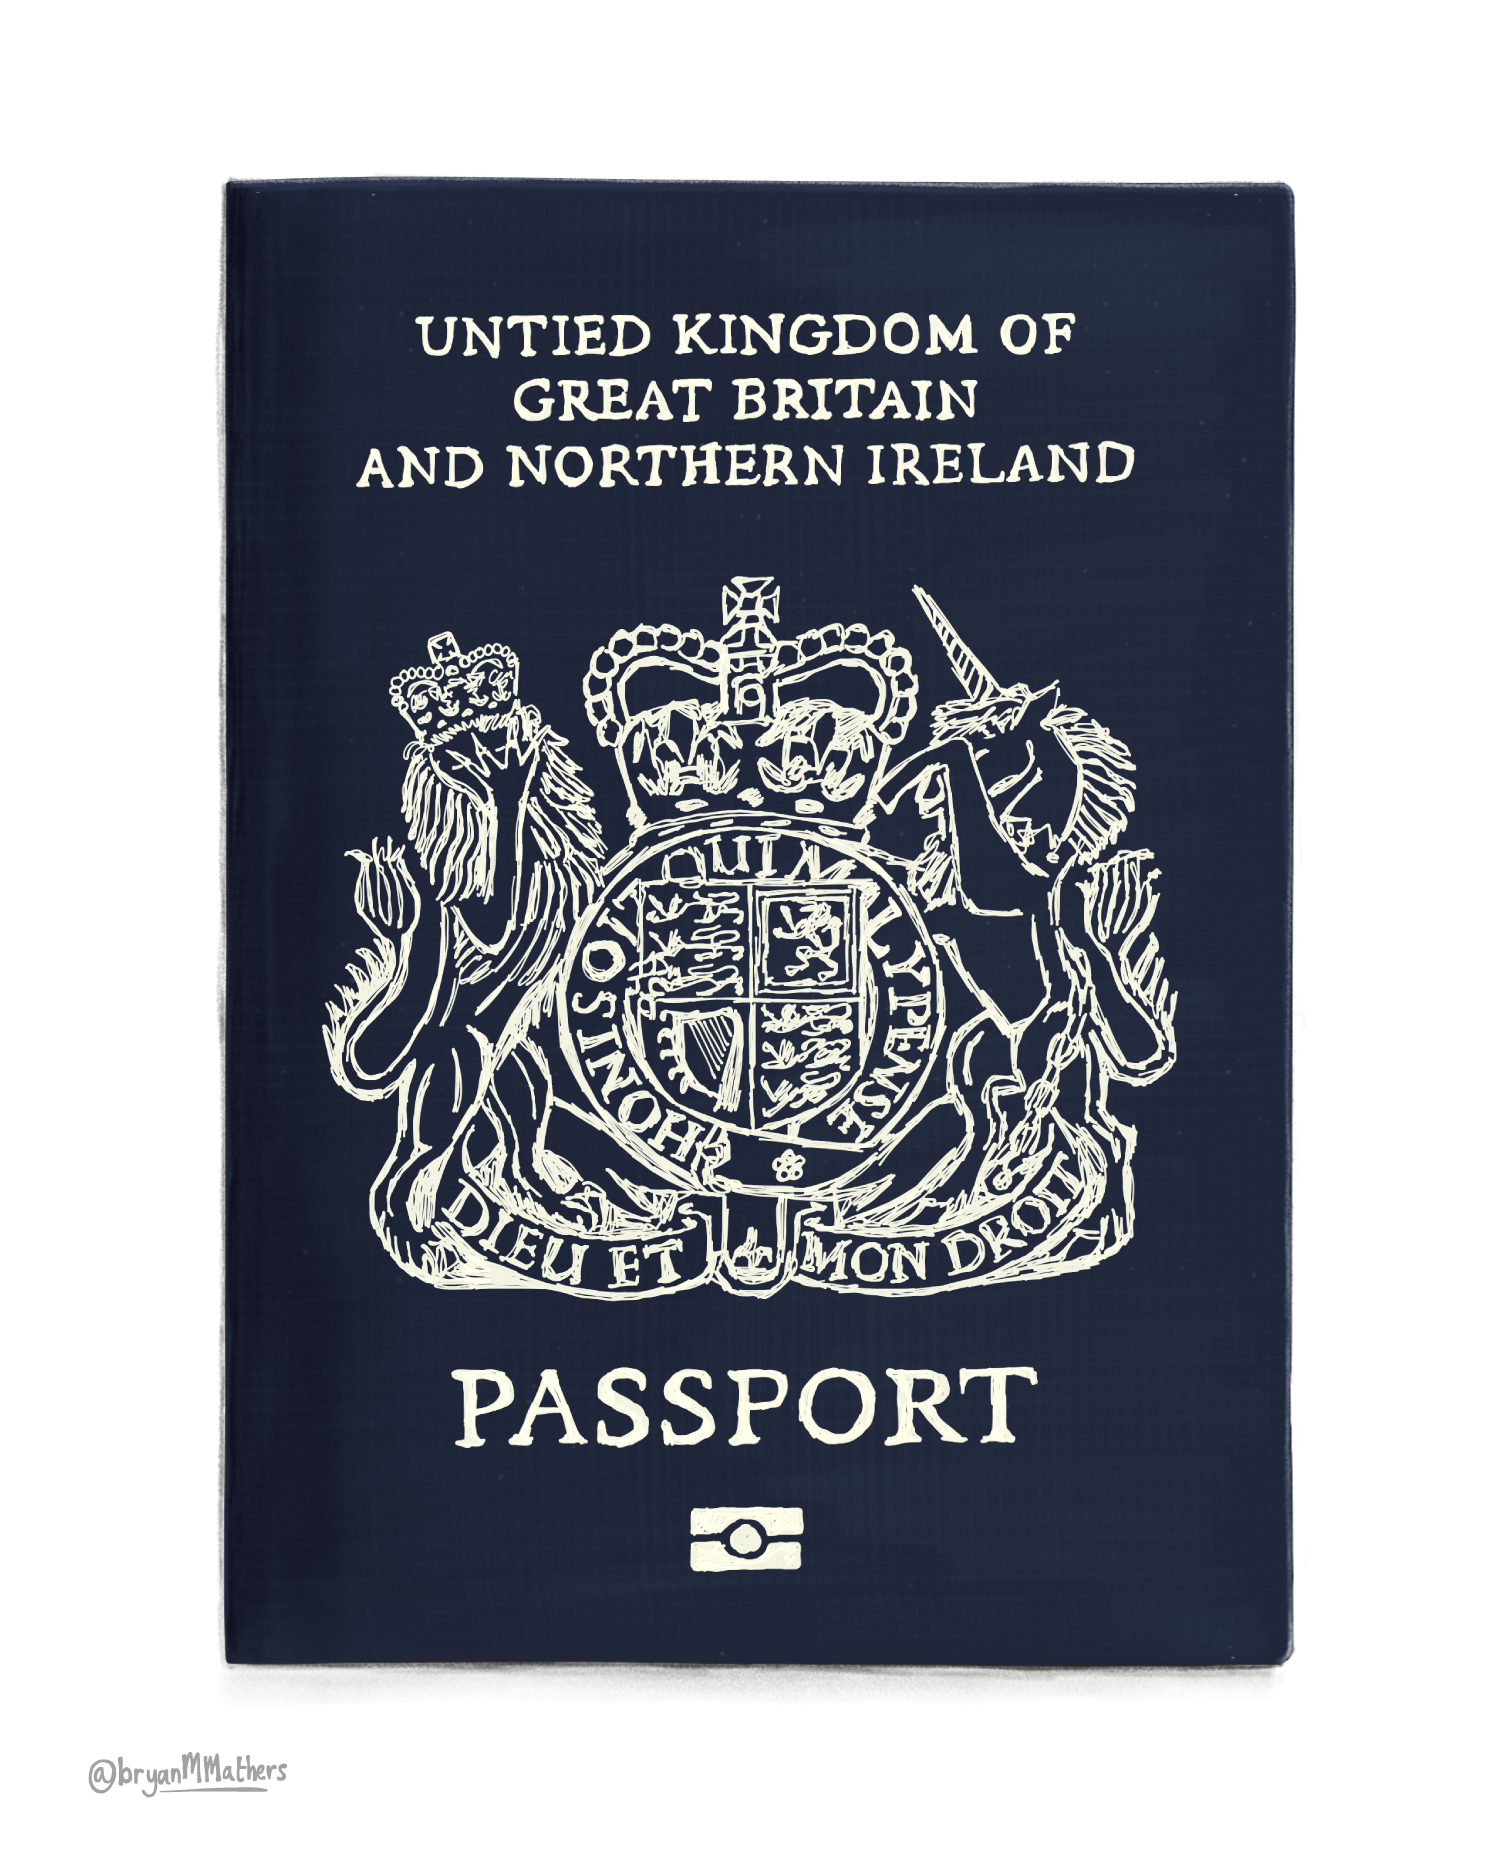 A post-brexit passport